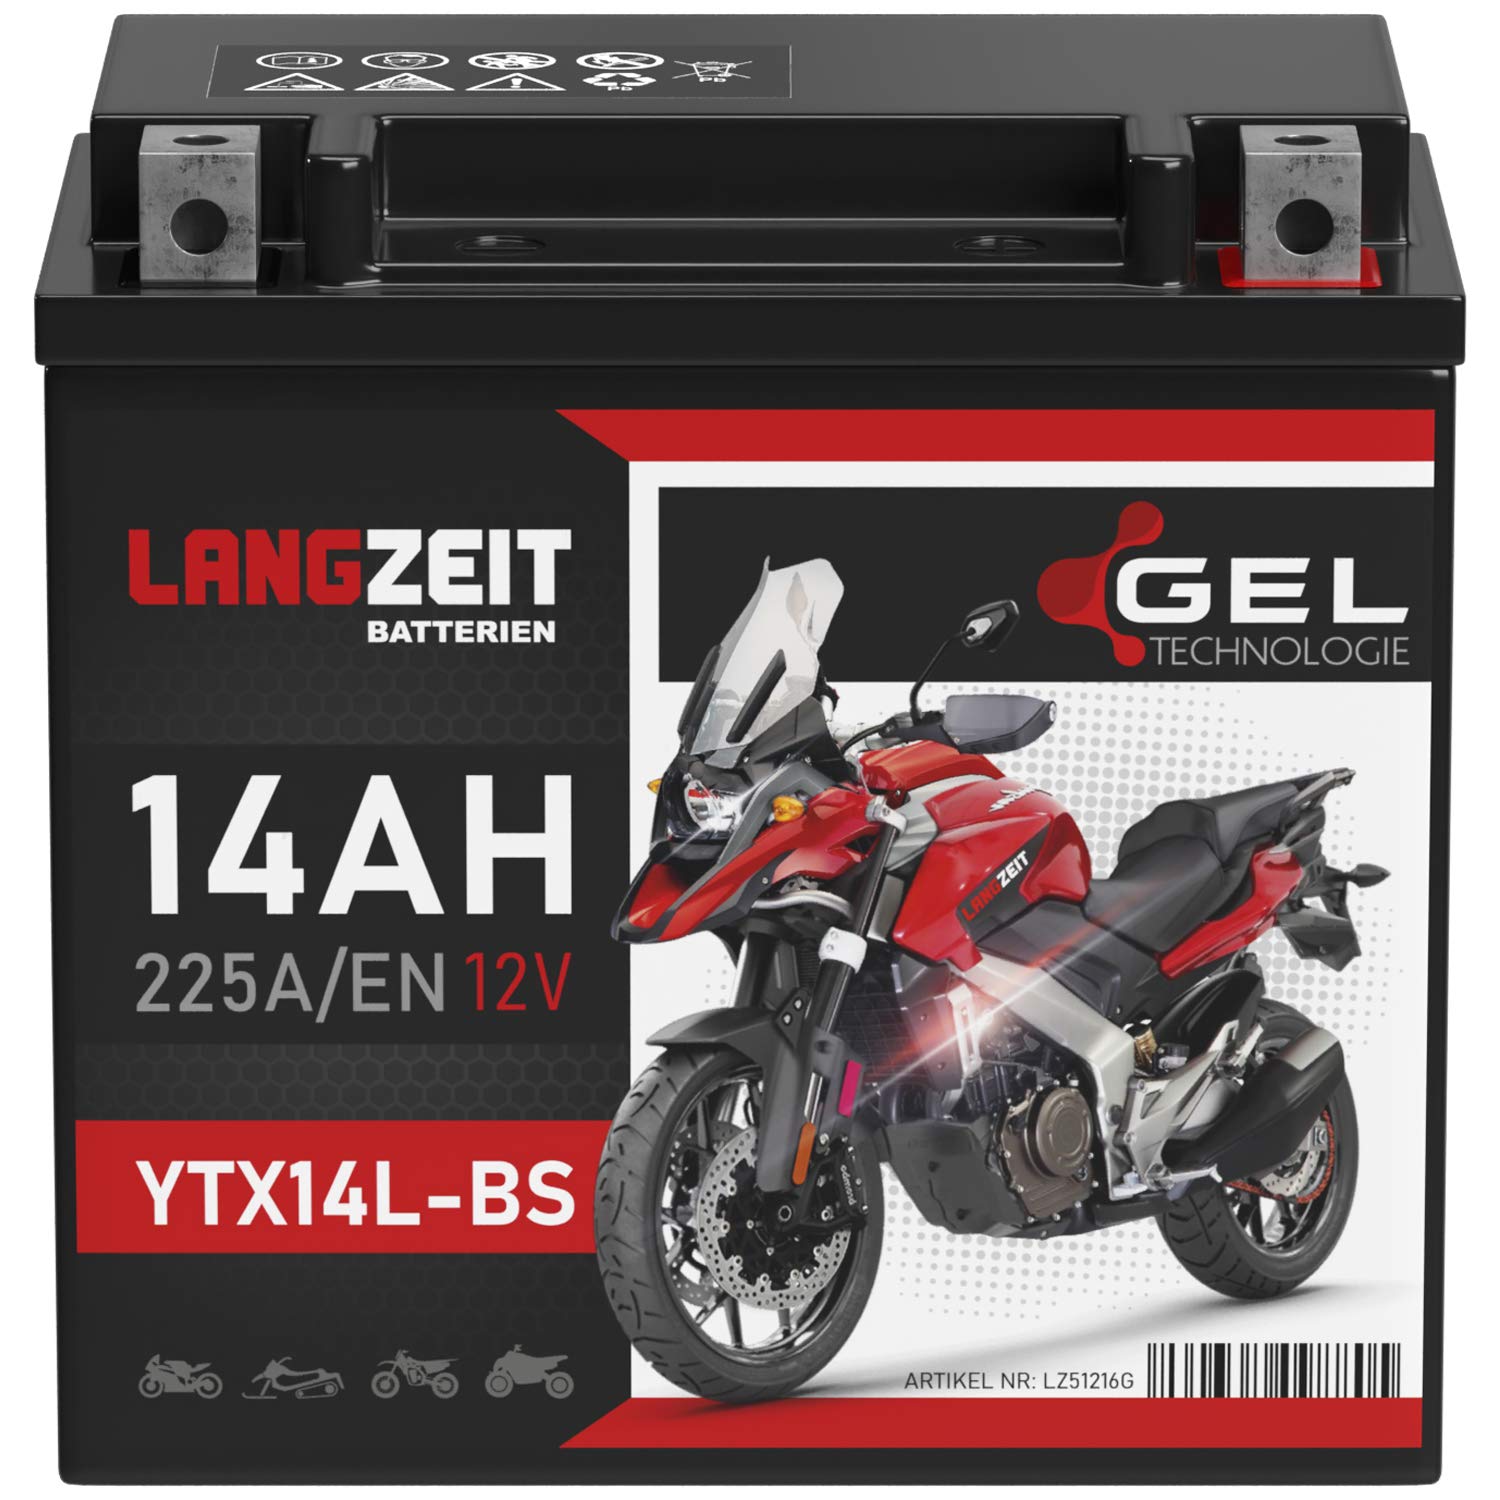 LANGZEIT YTX14L-BS Motorradbatterie 12V 14Ah 225A/EN HVT-03 GEL Batterie 12V 51216 HVT-3 doppelte Lebensdauer vorgeladen auslaufsicher wartungsfrei von LANGZEIT Batterien